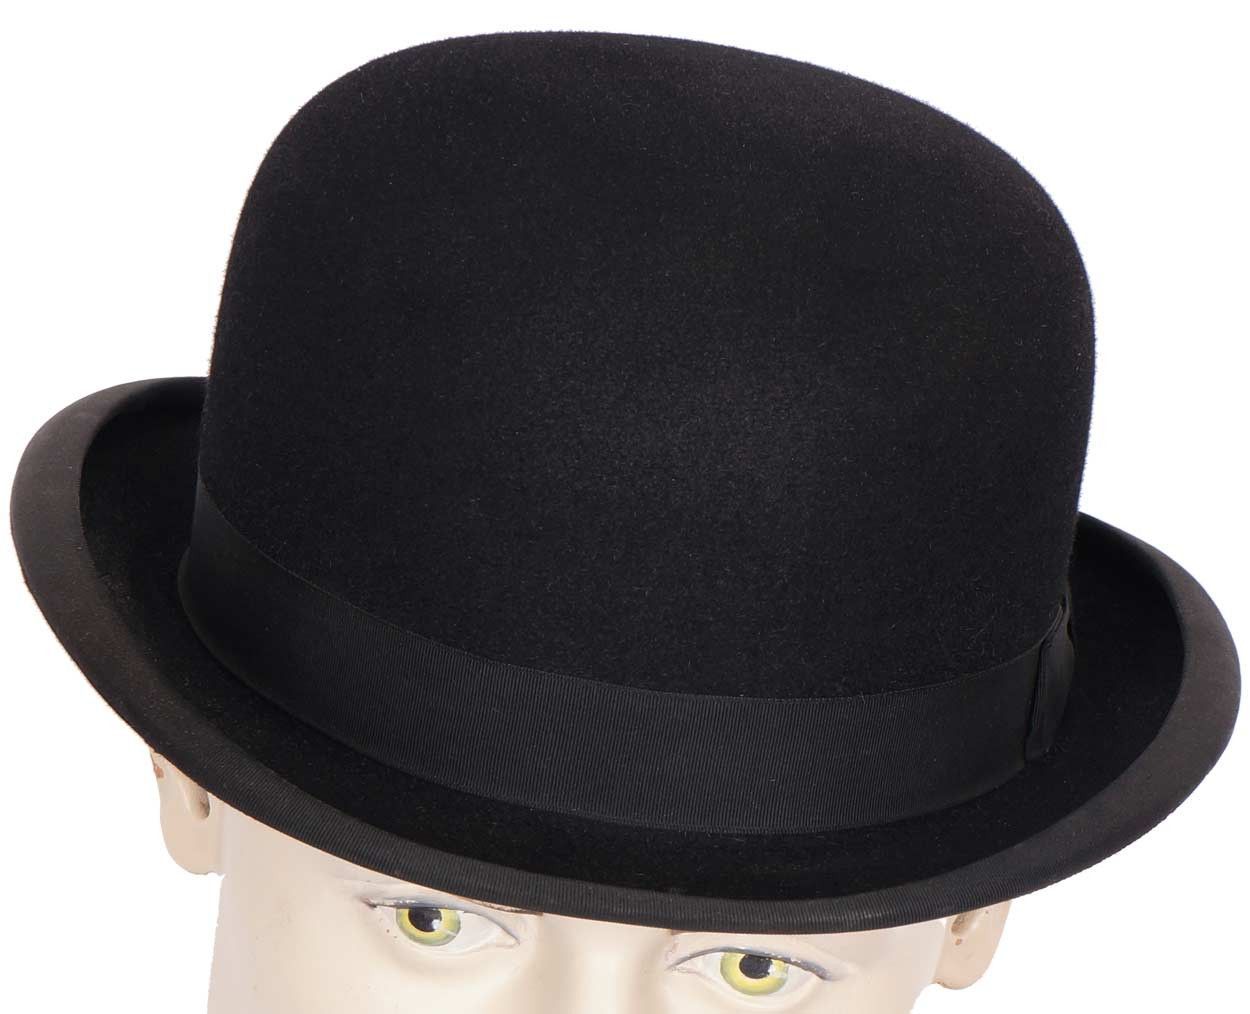 Мужская шляпа кроссворд. Котелок шляпа 19 век. Боулер дерби шляпа. Шляпа котелок мужская 19 века. Мужские английские котелки шляпы 19 века.